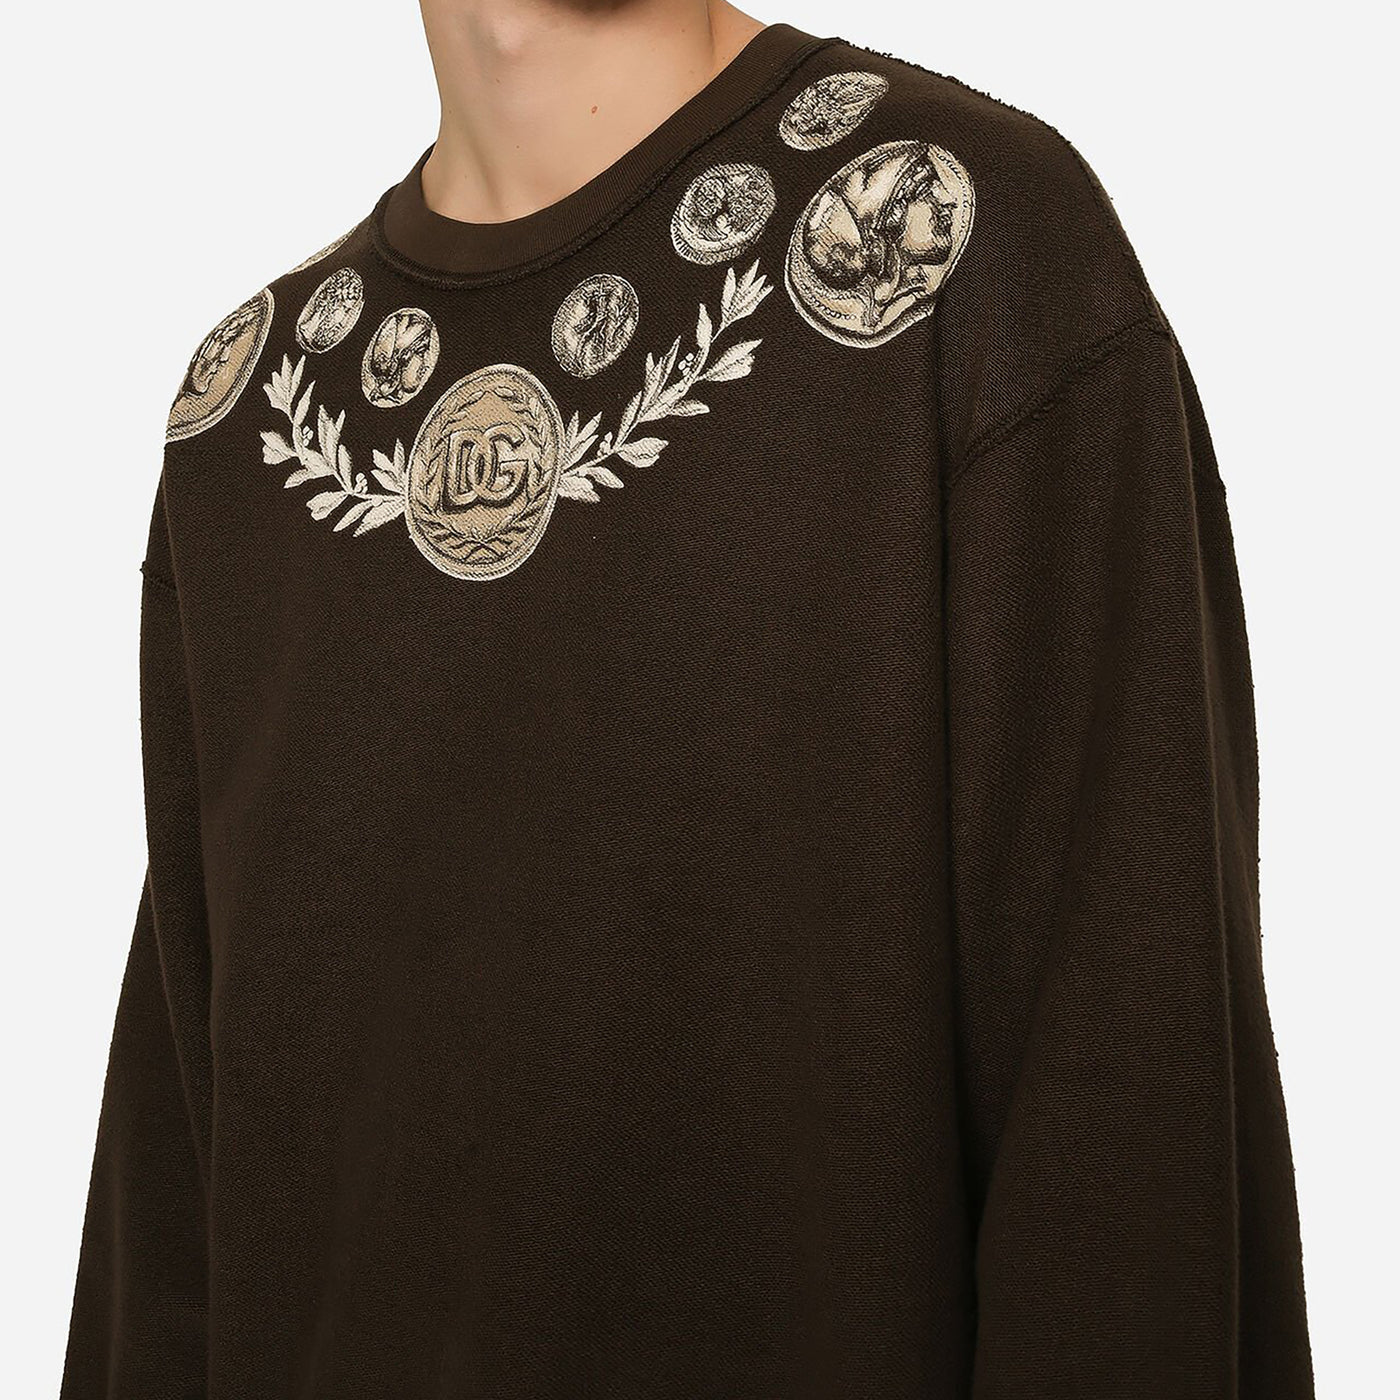 Dolce & Gabbana Coin Print Inside Out Sweatshirt